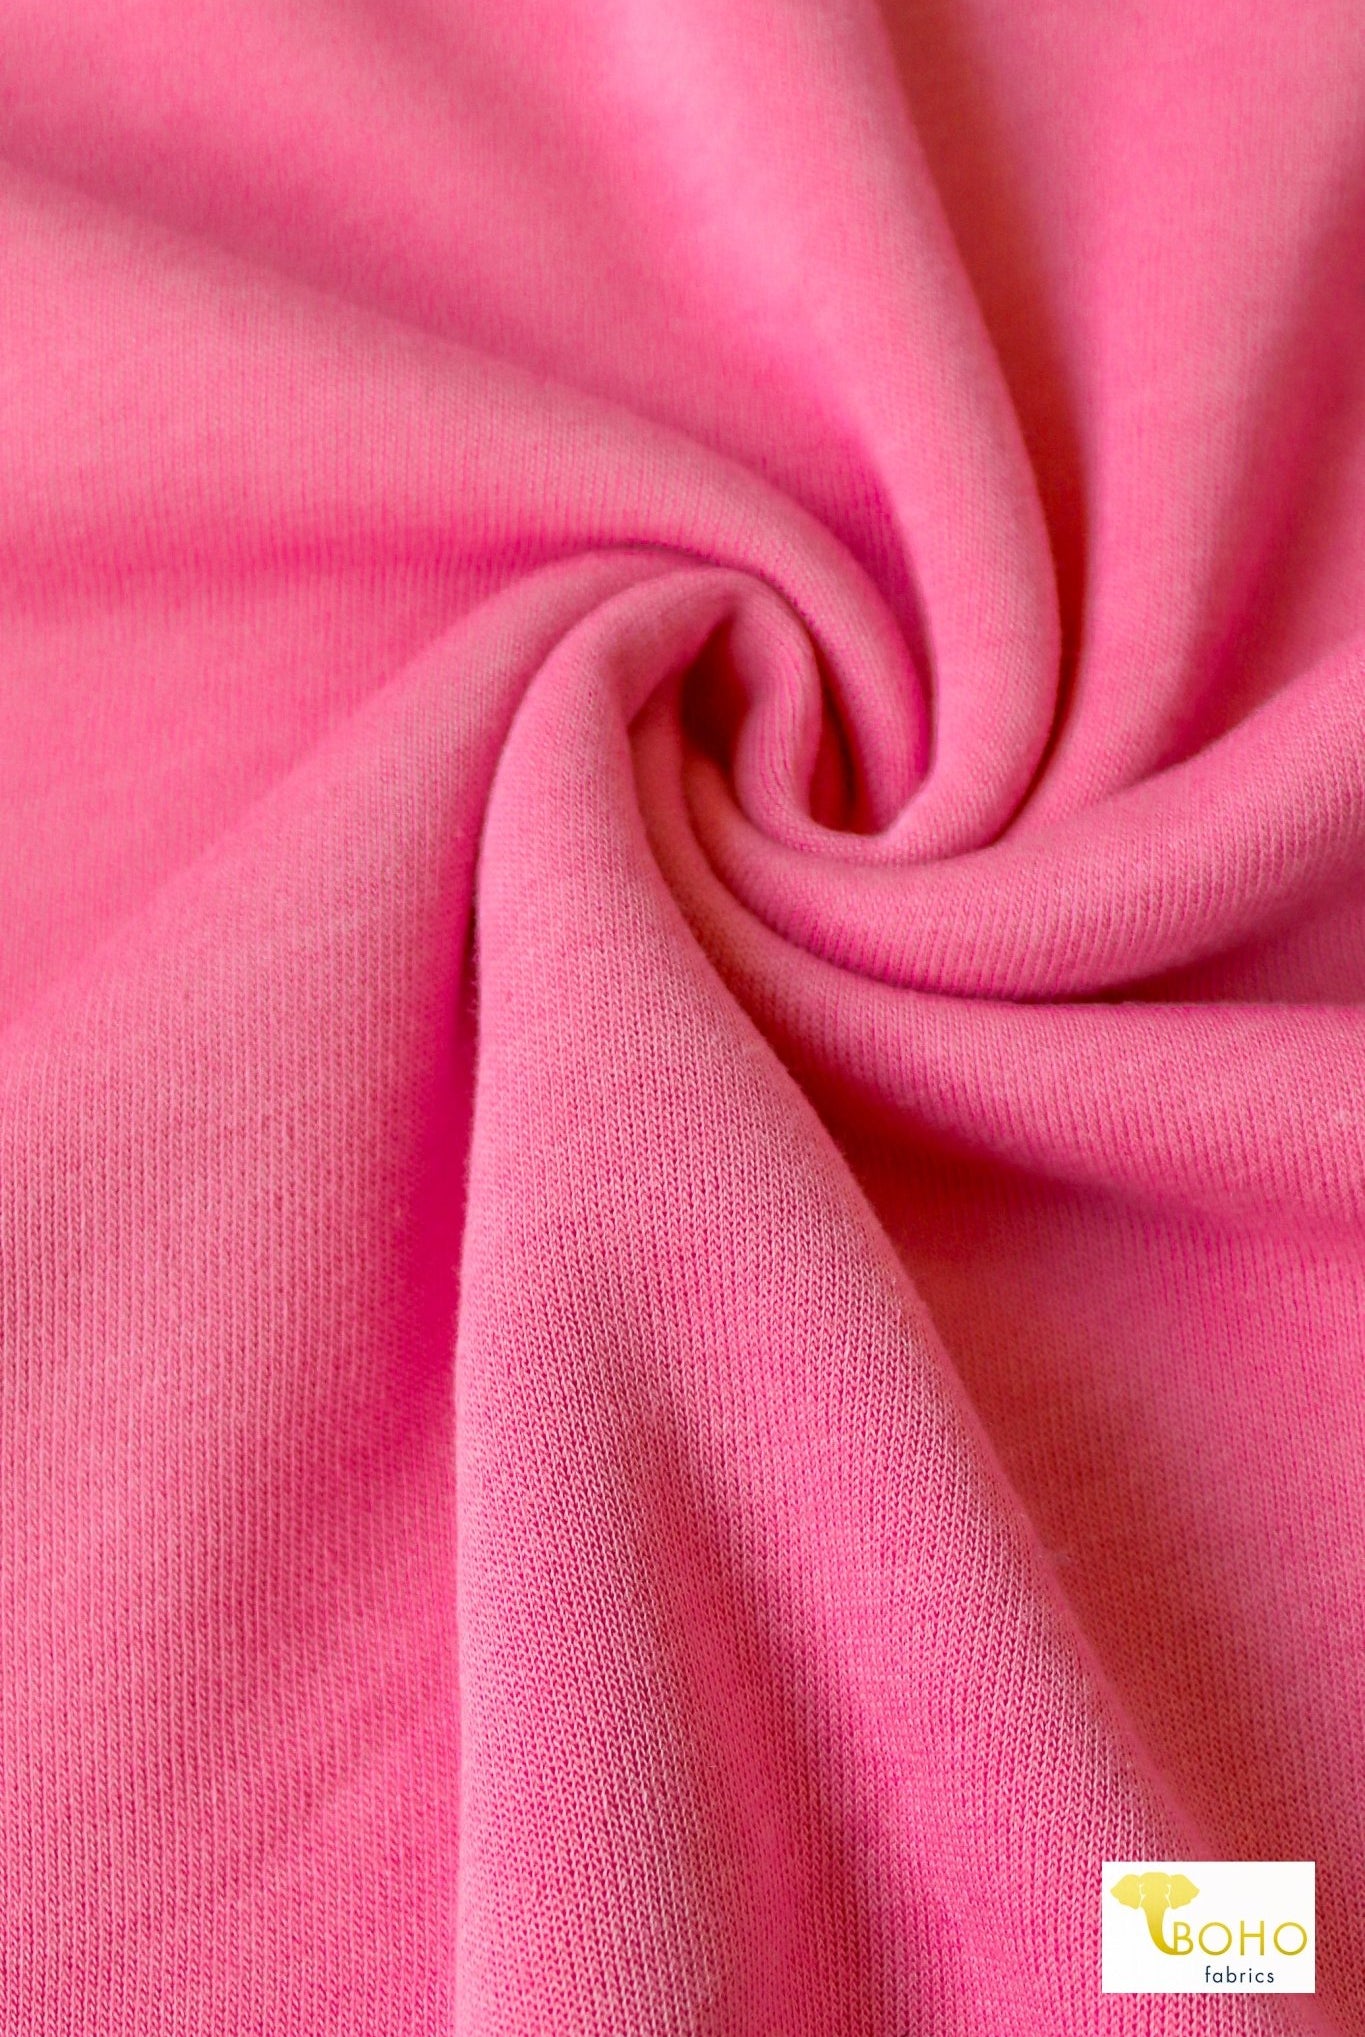 1x1 Rib Knit, Cotton Candy Pink. SOLD BY THE HALF YARD! - Boho Fabrics